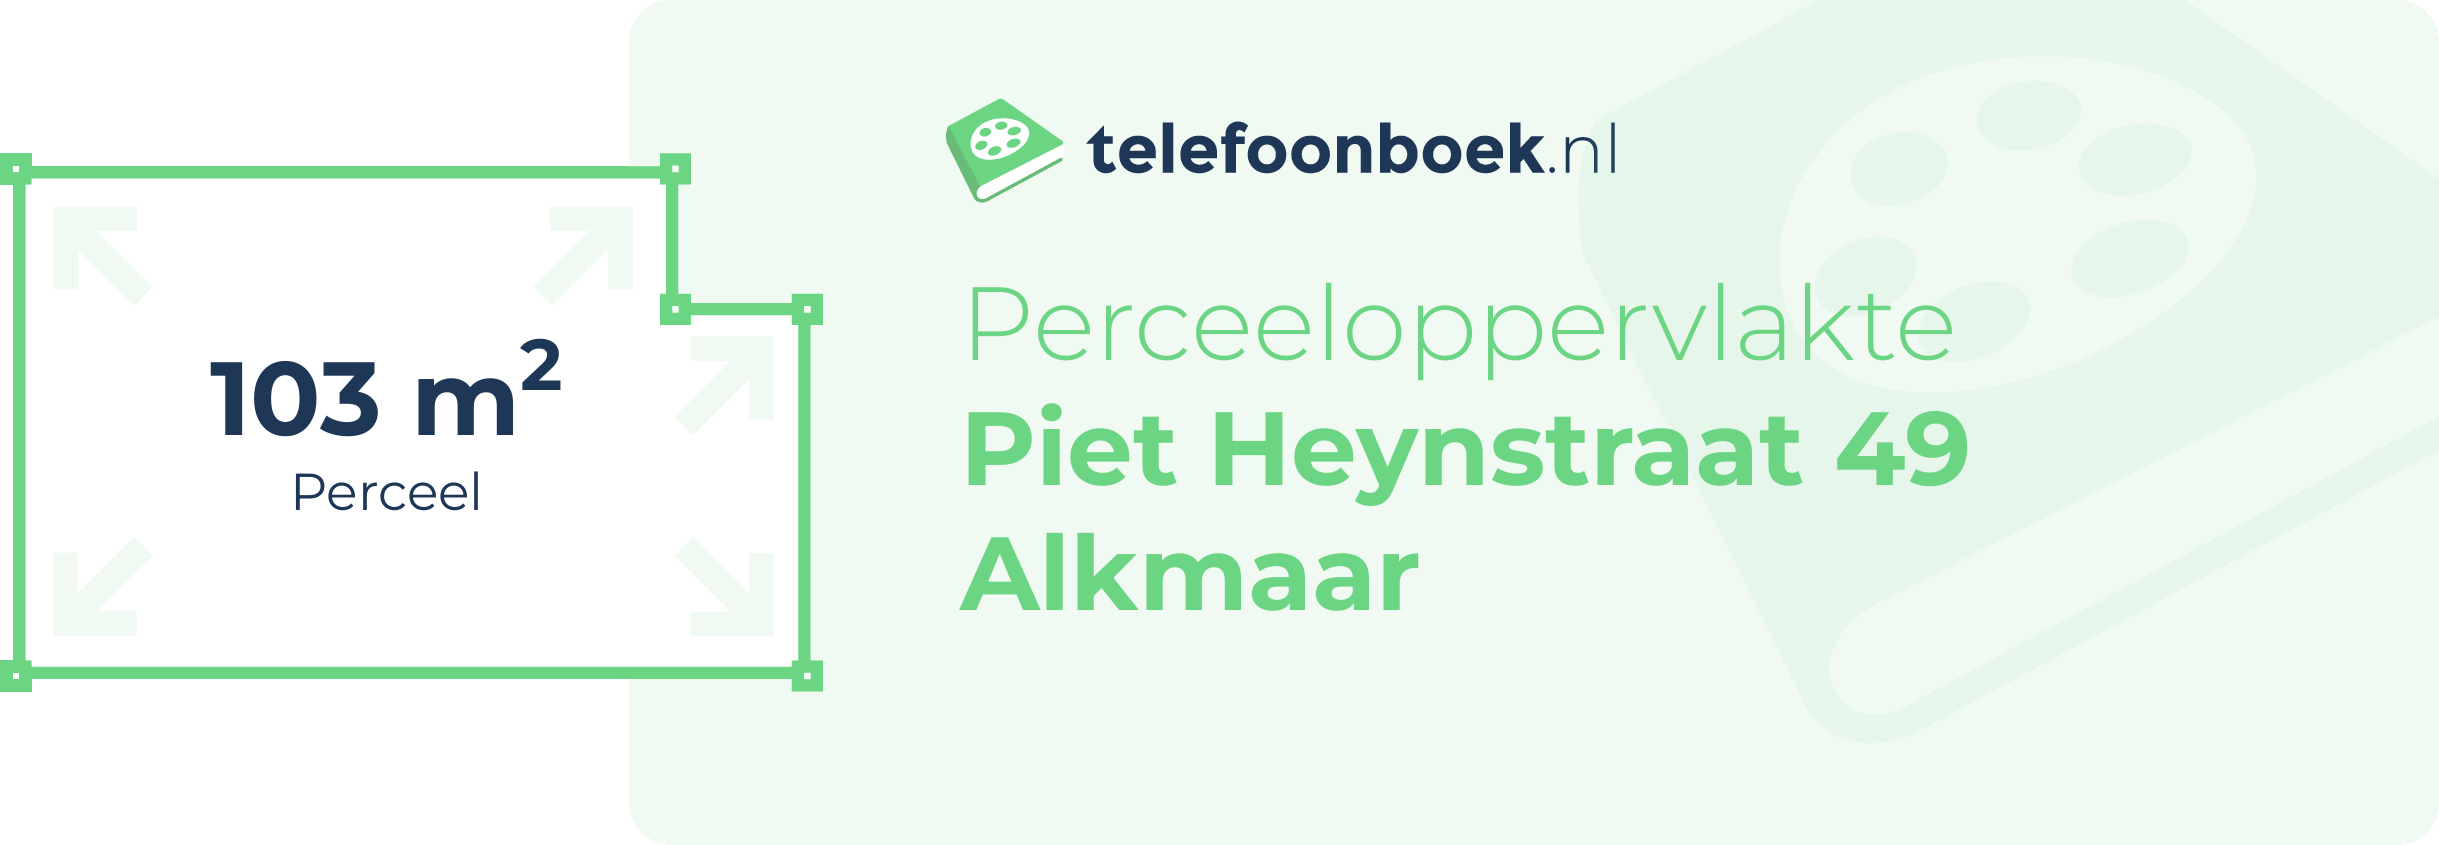 Perceeloppervlakte Piet Heynstraat 49 Alkmaar